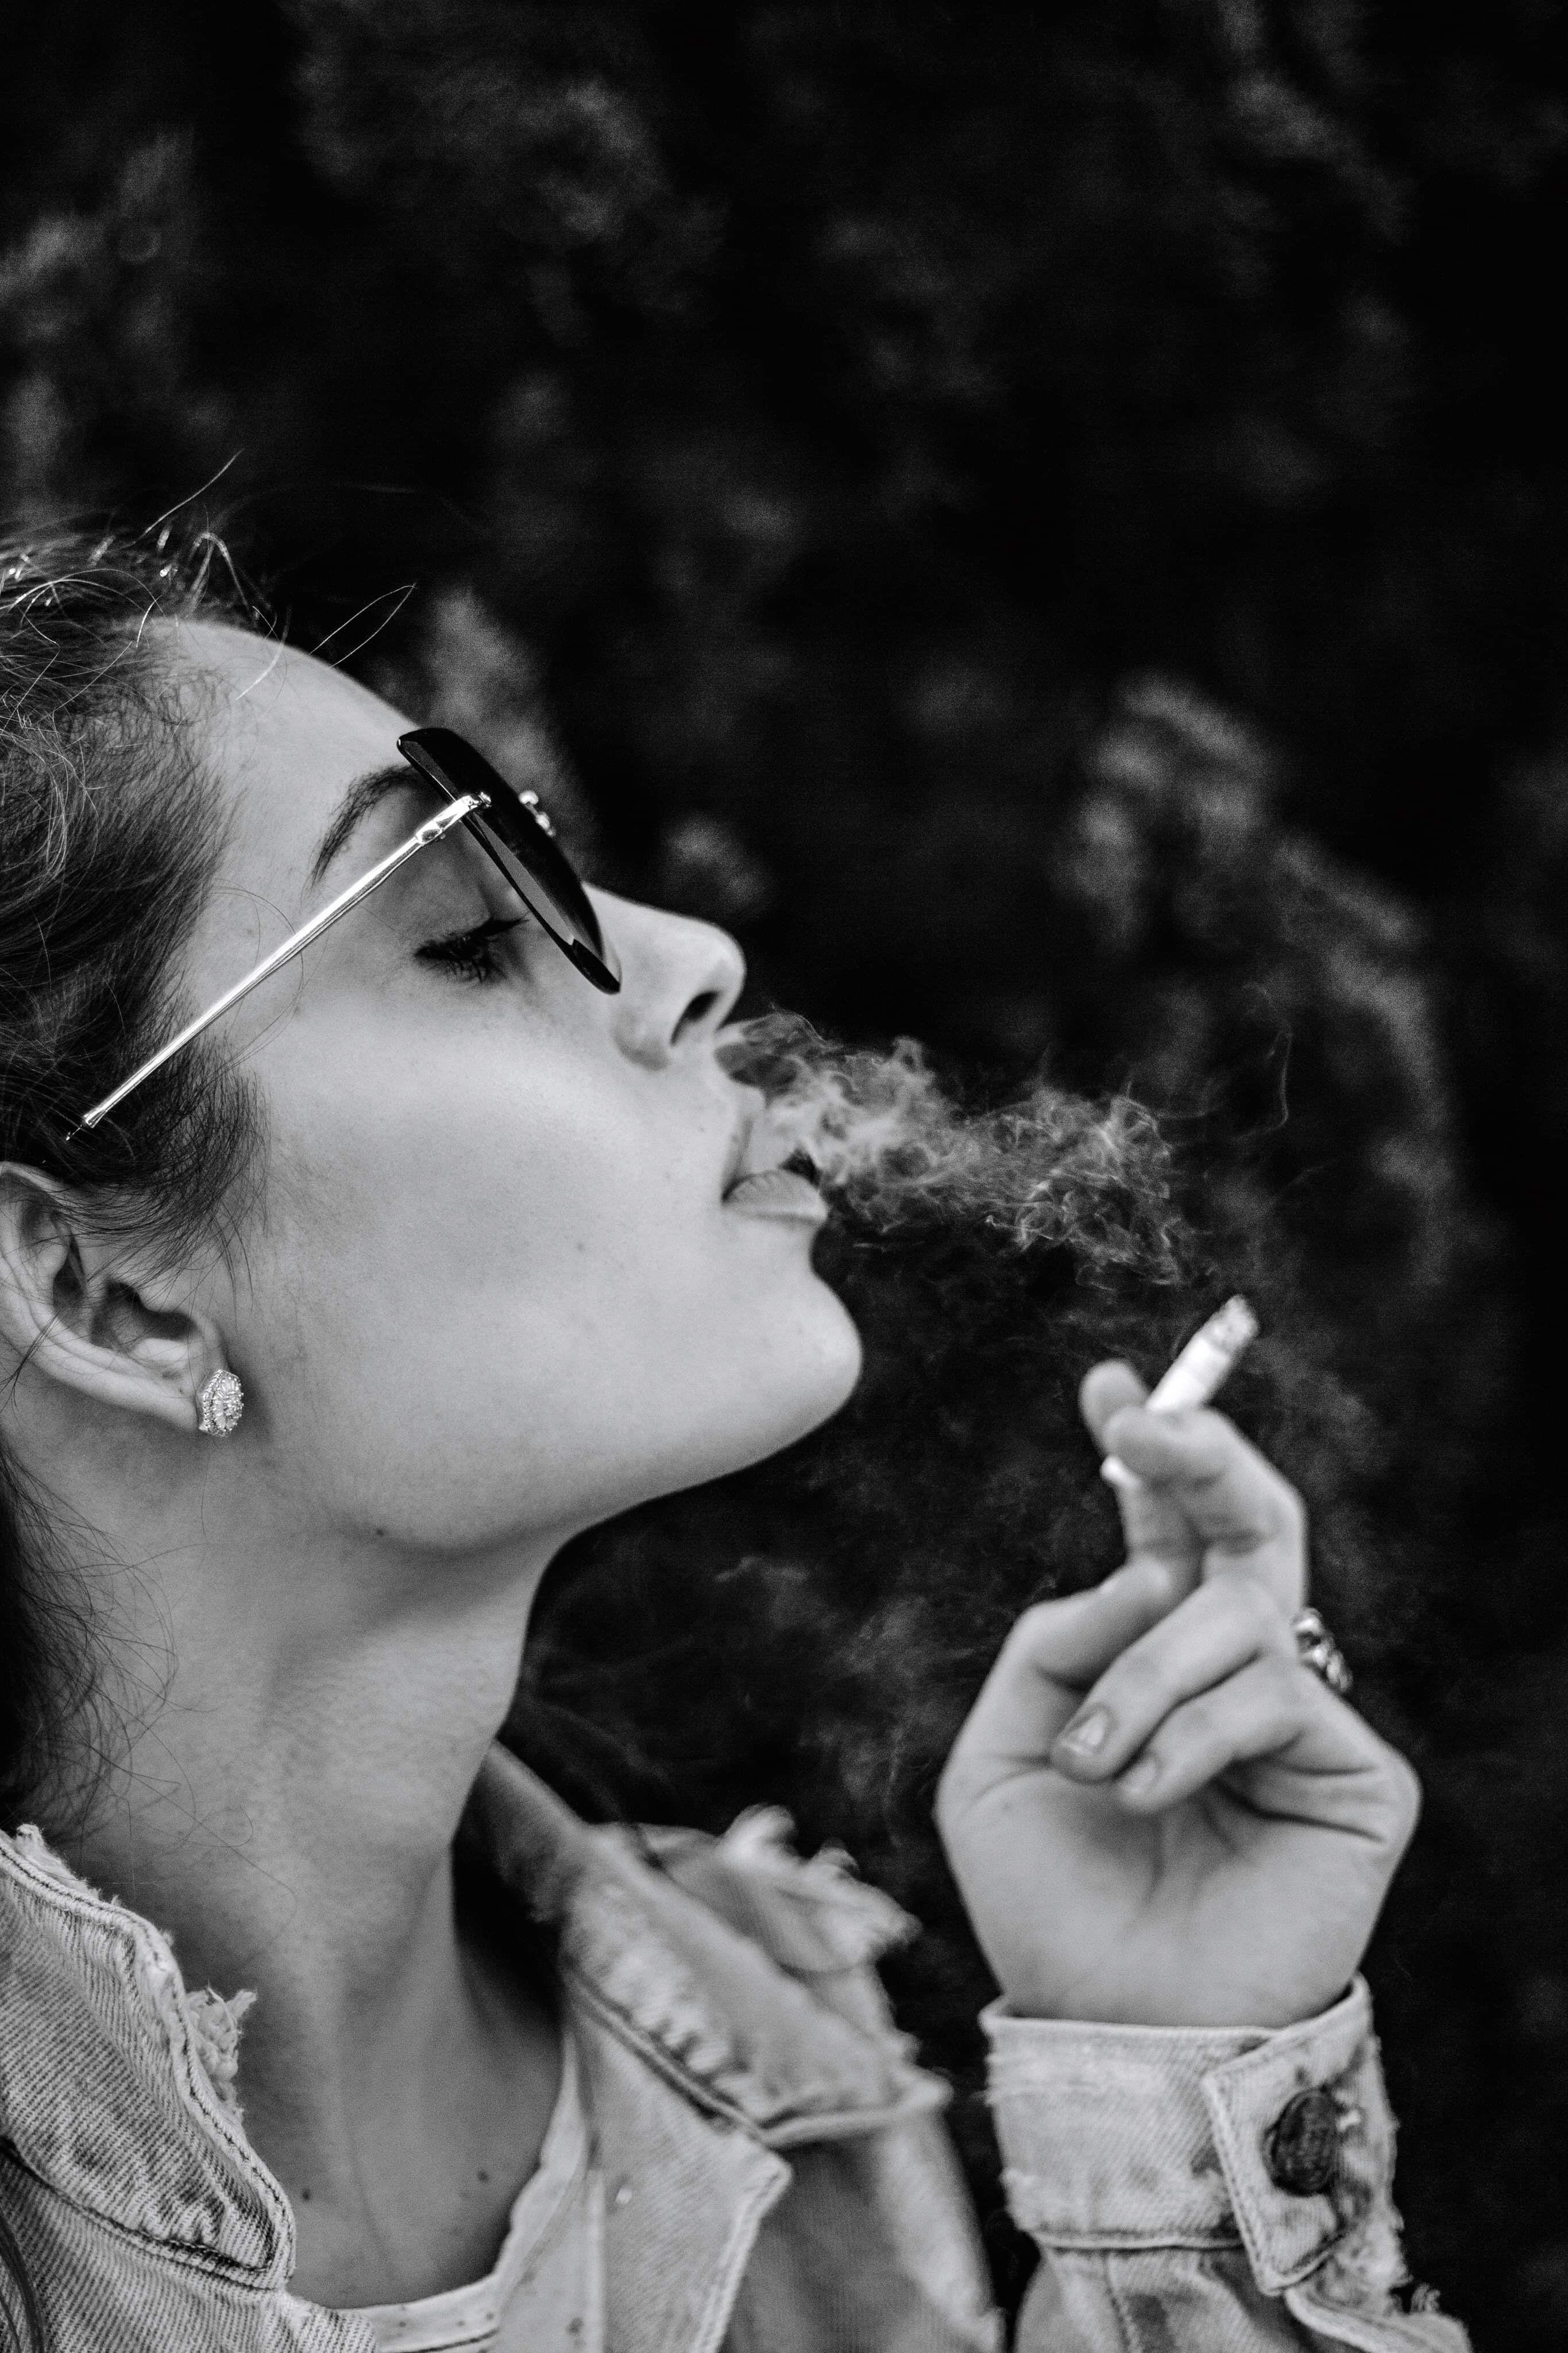 Monochrome Photo of Woman Smoking Cigarette · Free